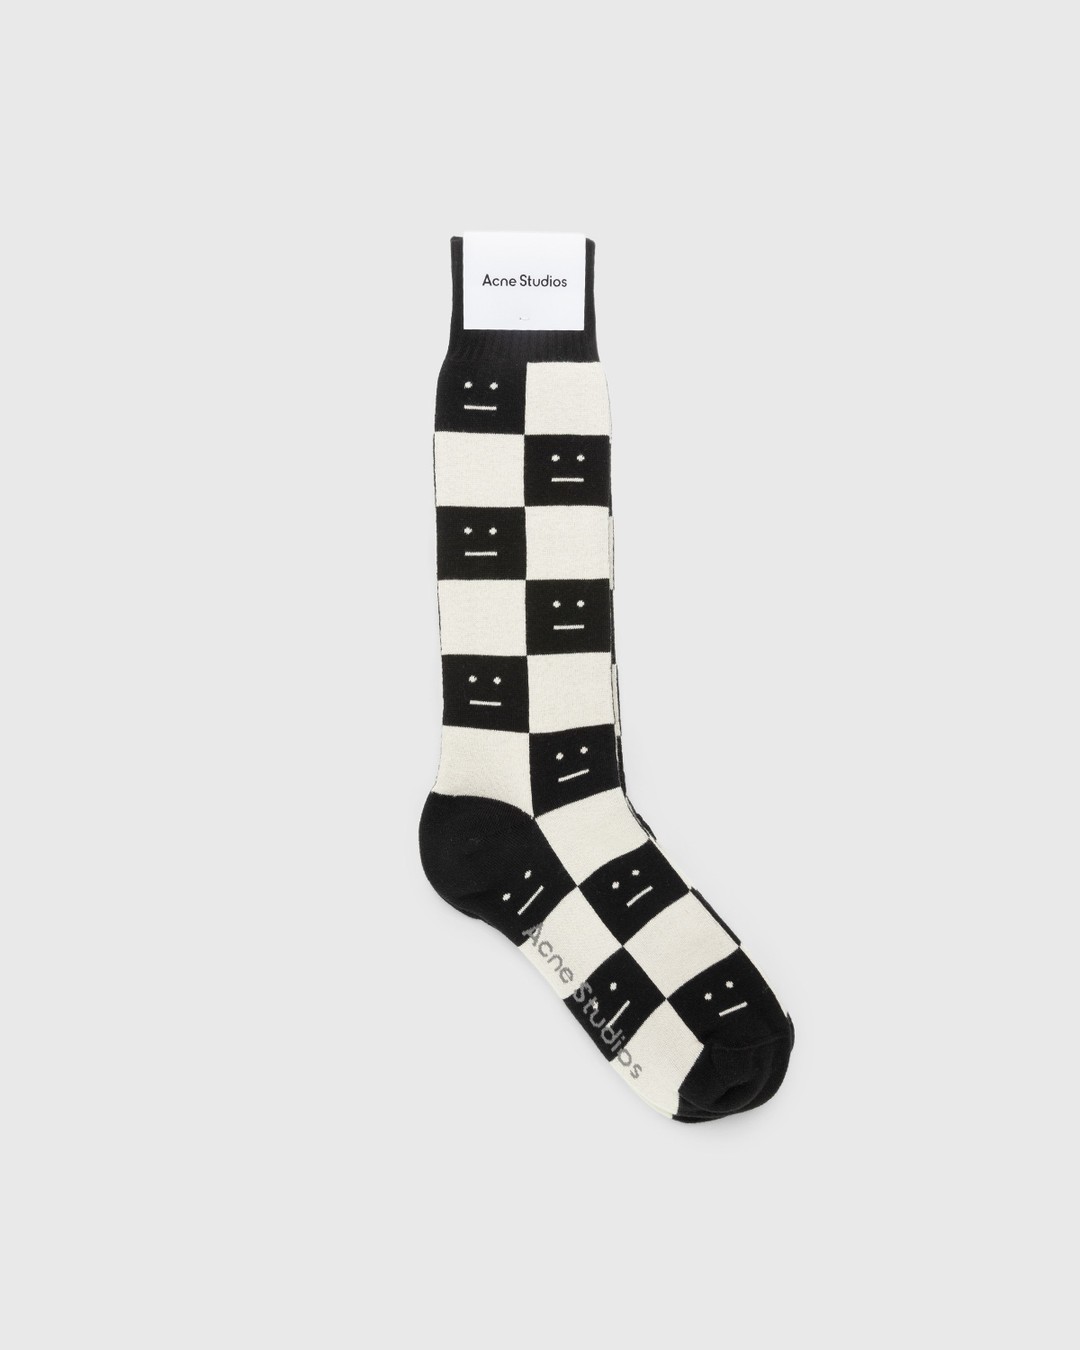 Acne Studios – Checkerboard Socks Black/Oatmeal Beige - Socks - Black - Image 1